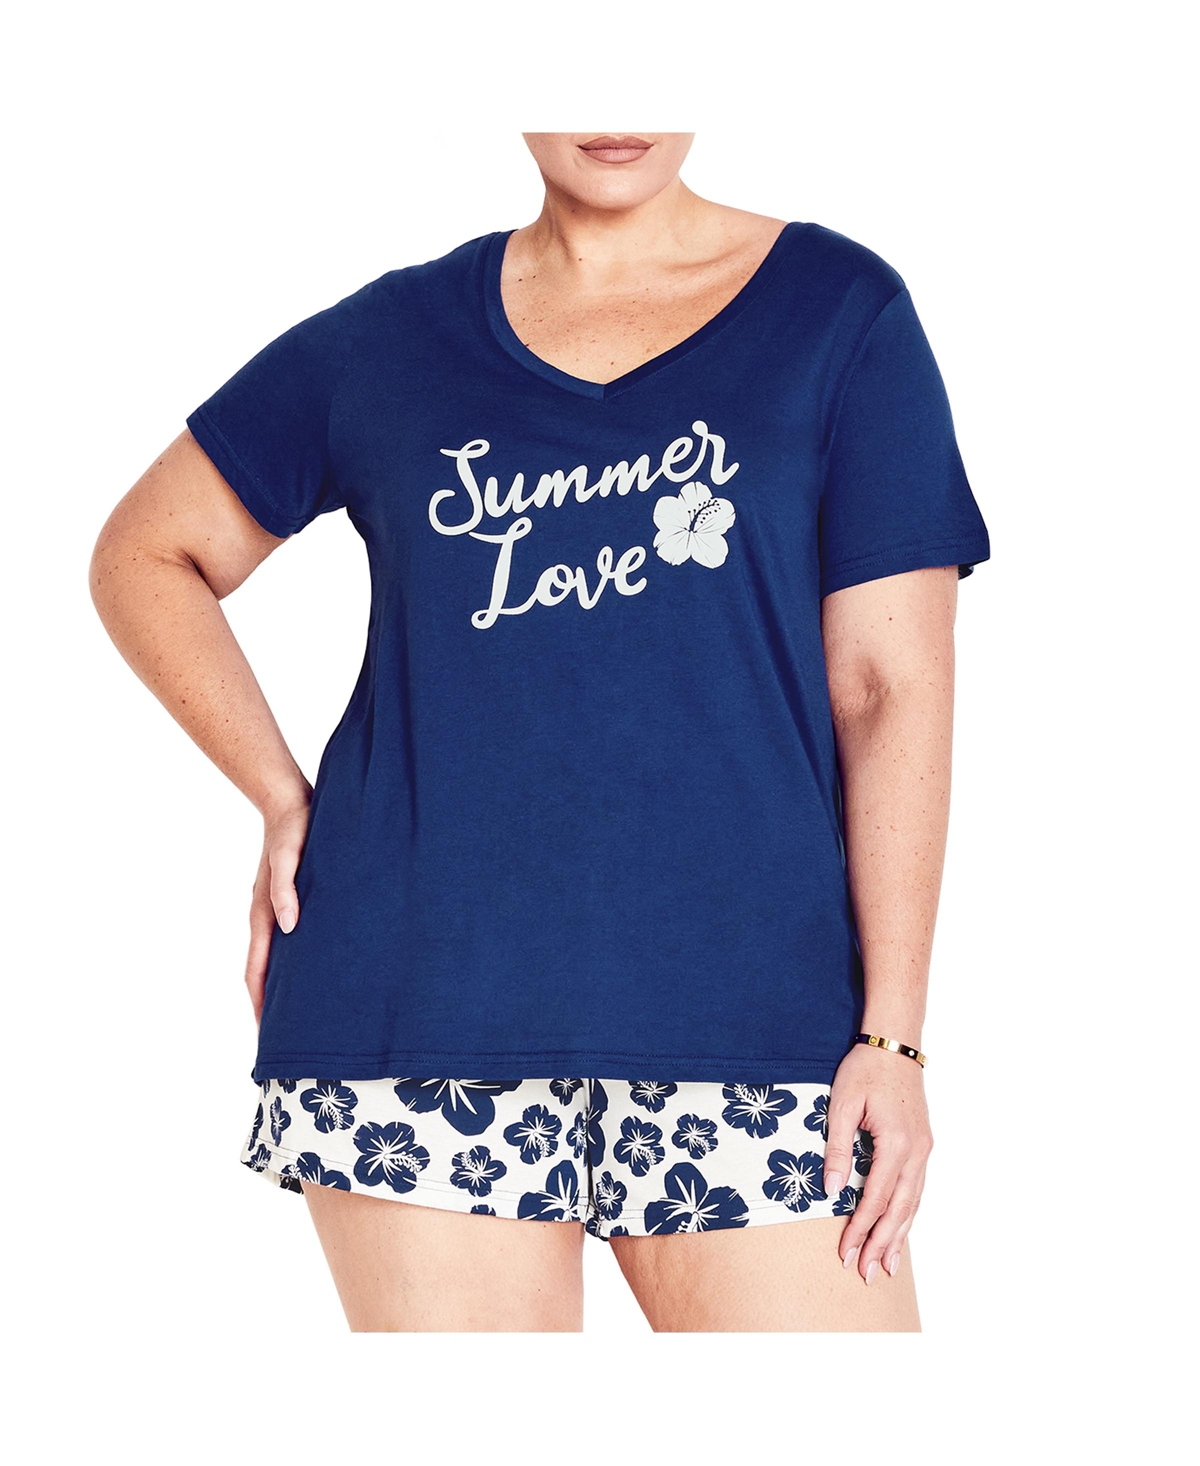 Plus Size Summer Love Sleep Top - Summer love